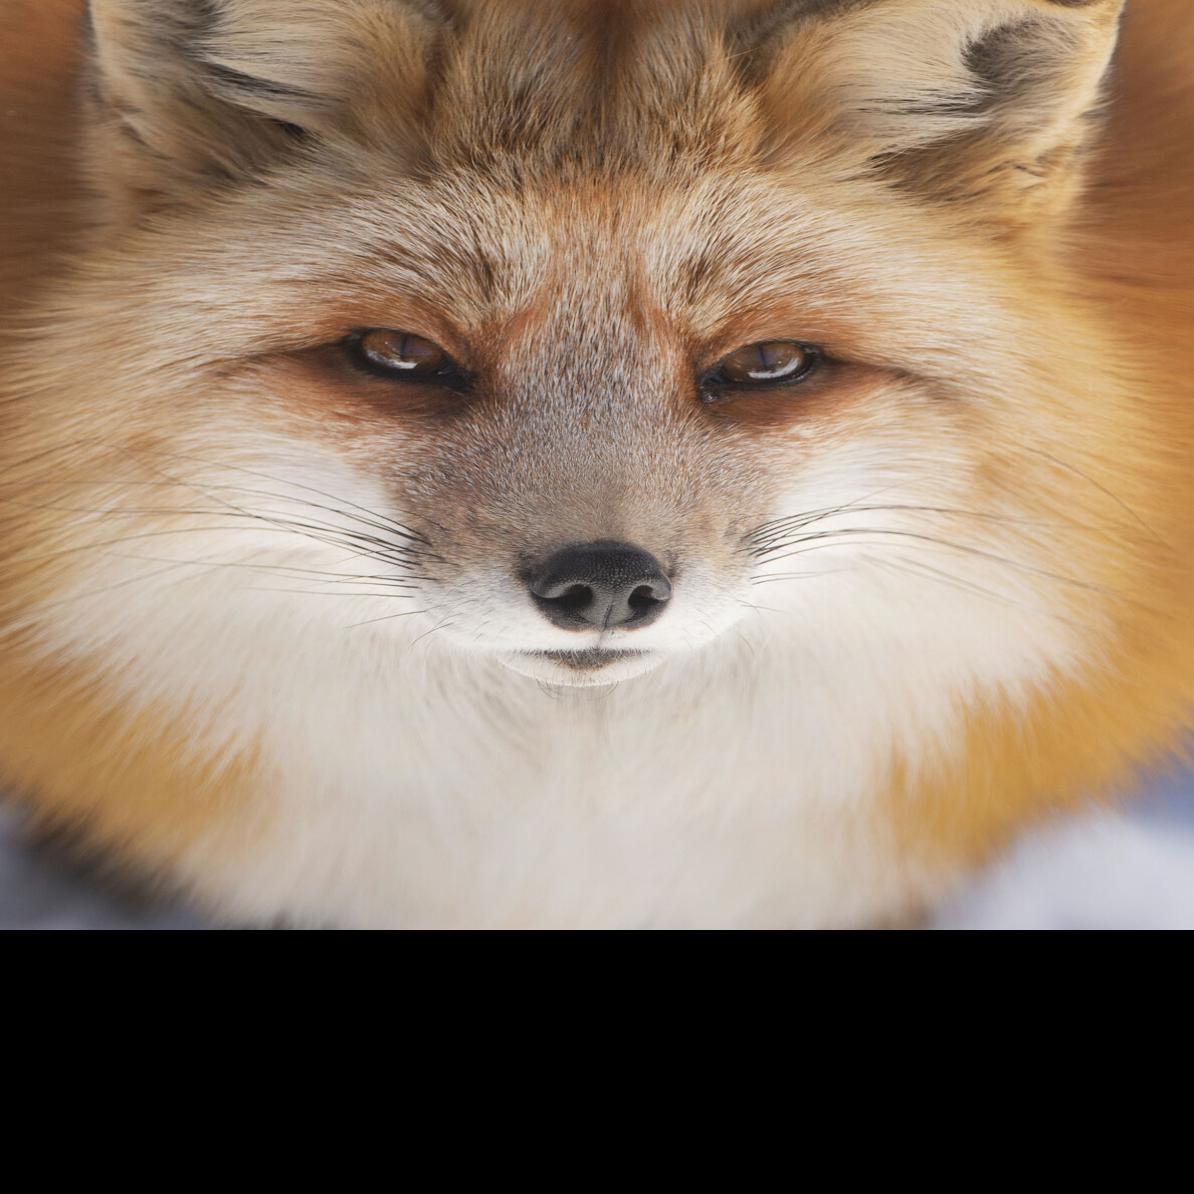 Fun fox facts, Wildlife in the News, The Tribune